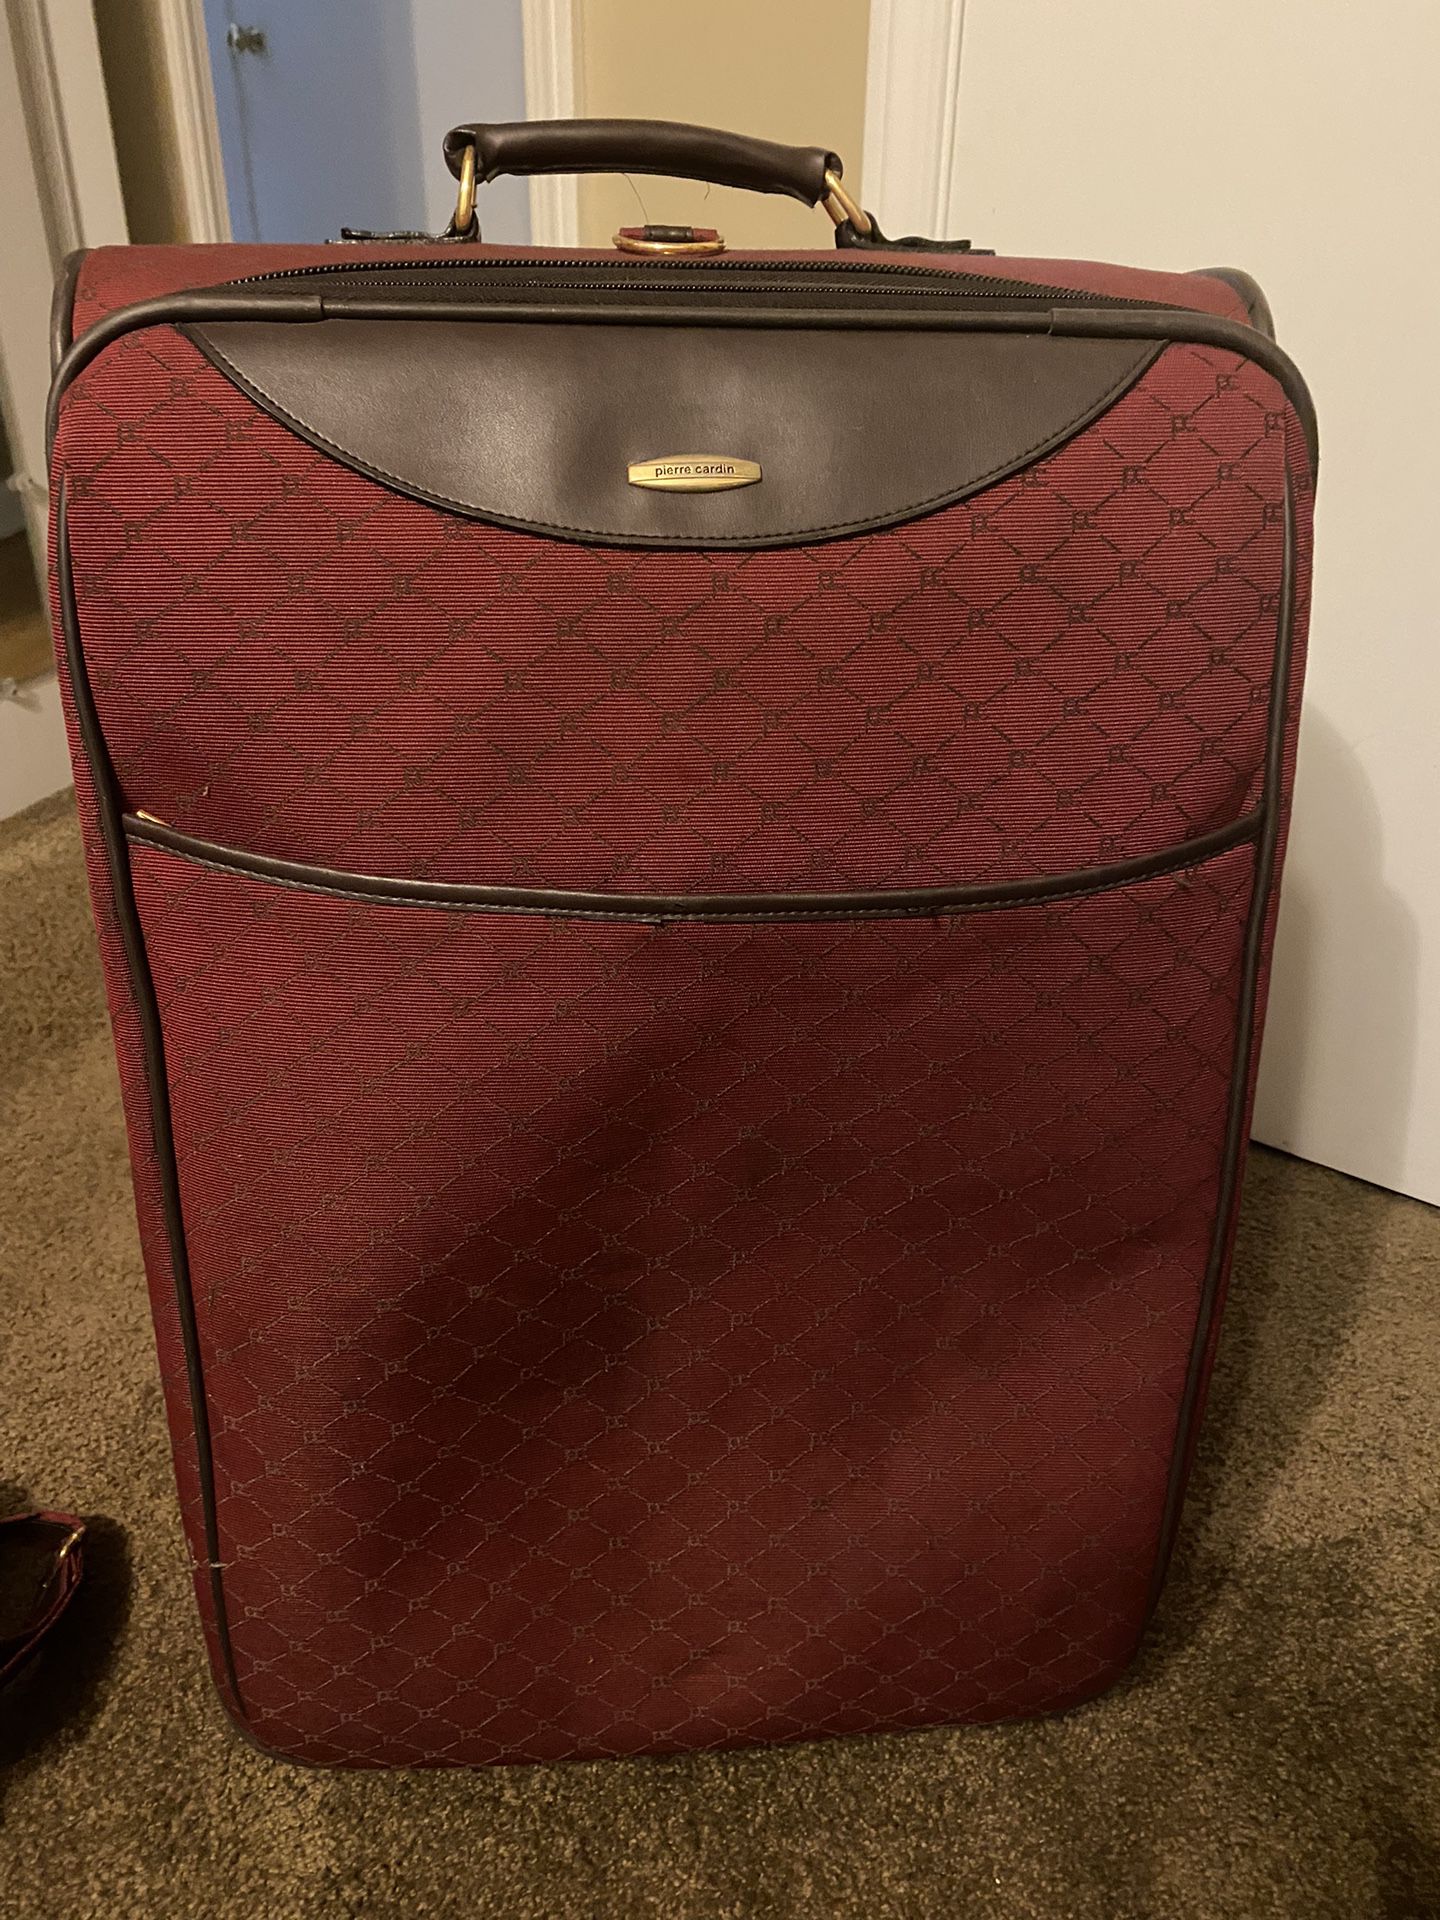 Luggage Set - 2 Piece